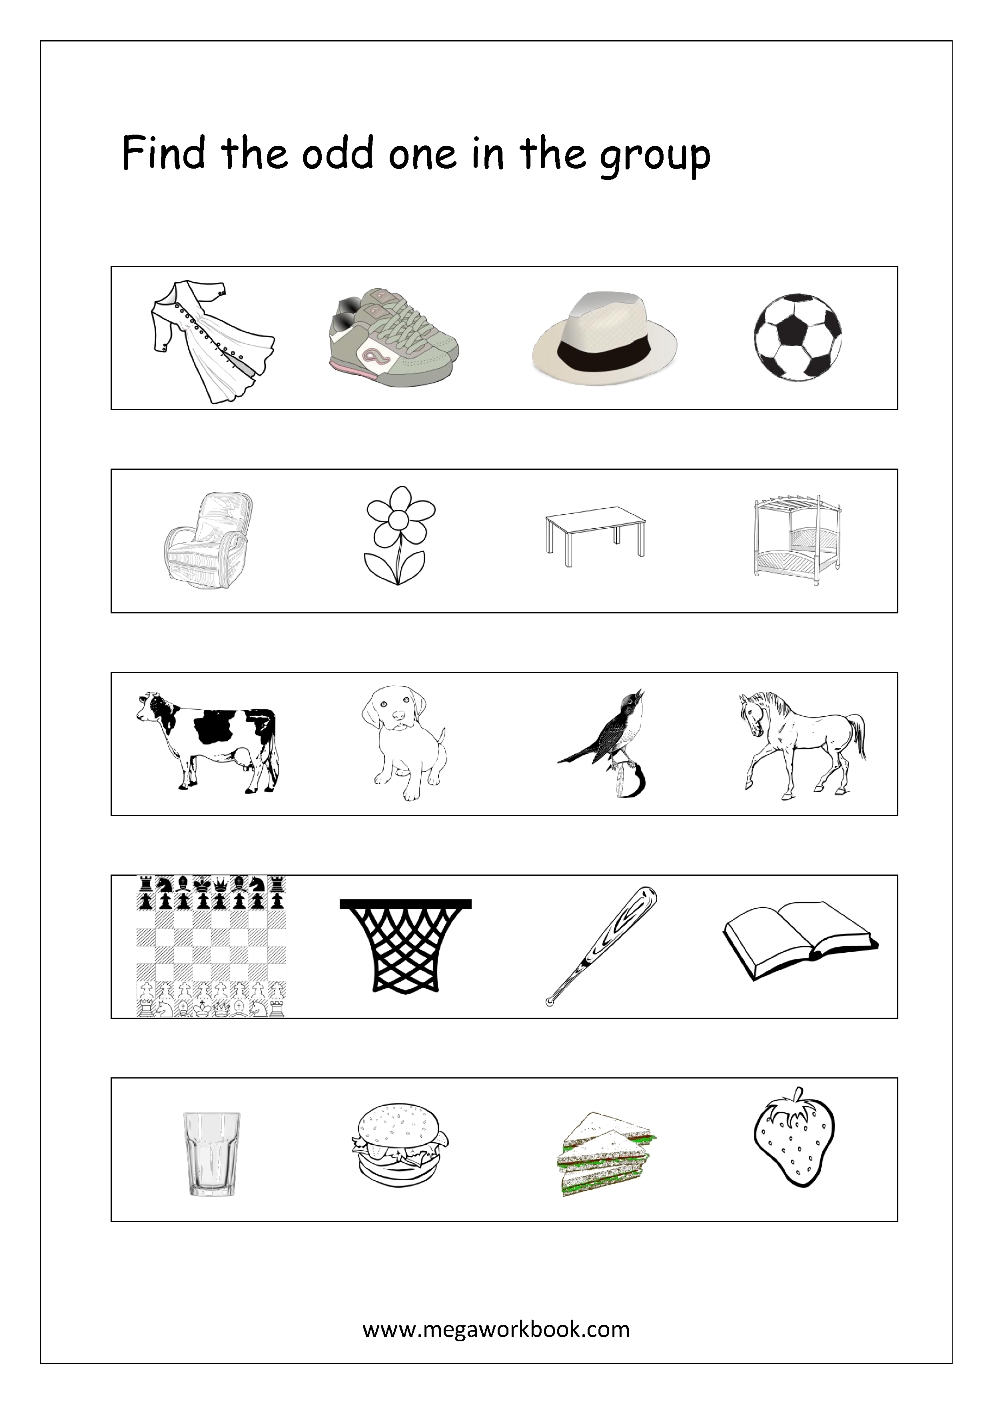 Free General Aptitude Worksheets - Odd One Out - Megaworkbook - Free Printable Worksheets For Kids Science